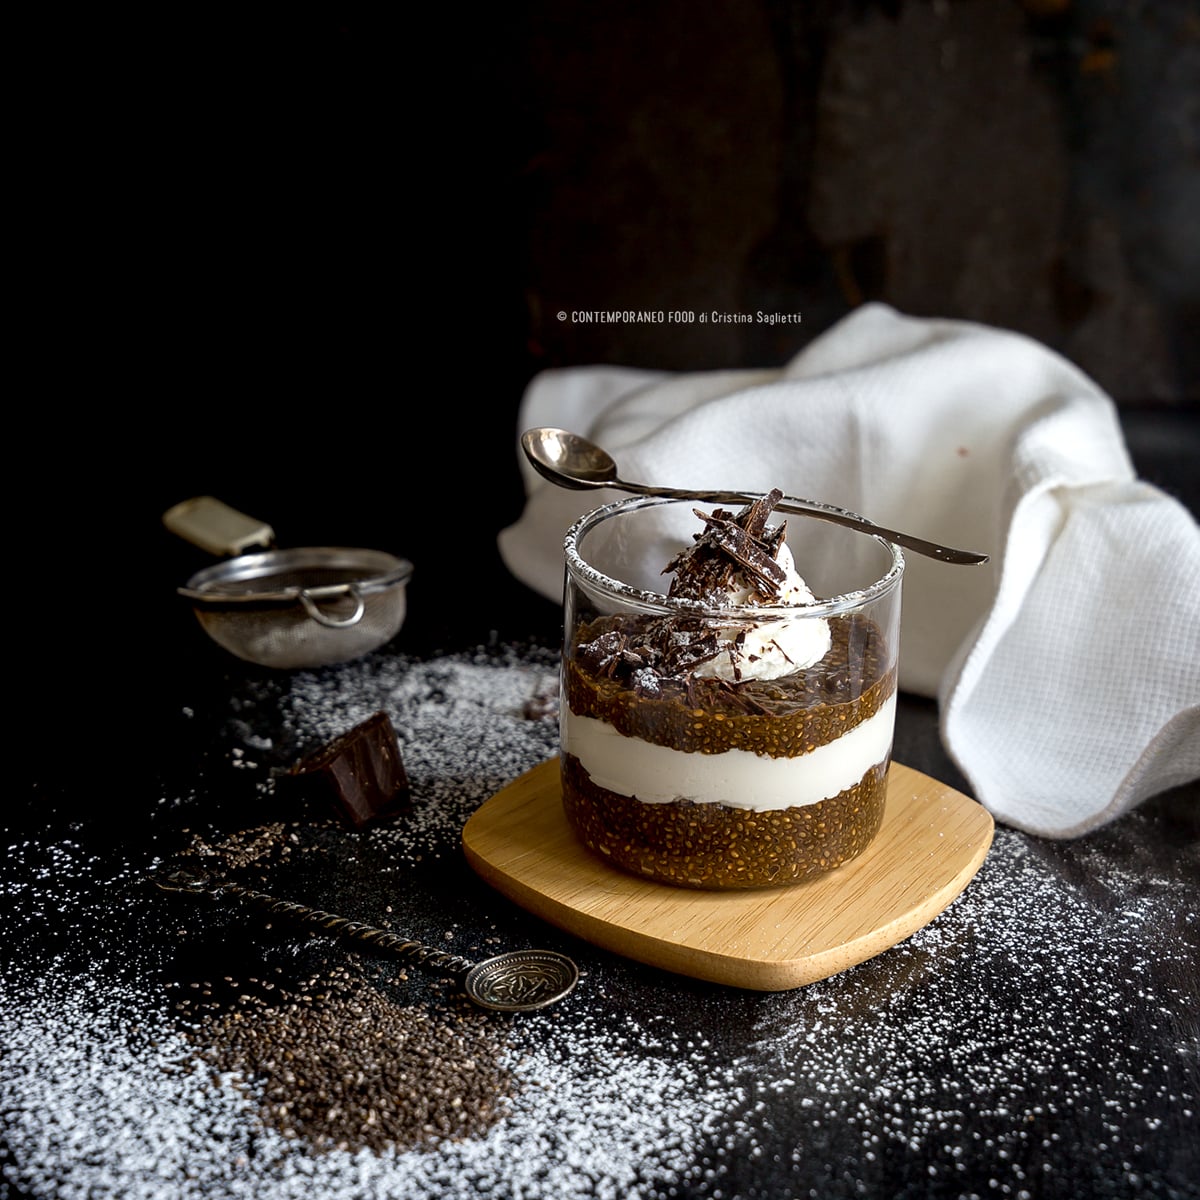 pudding-ai-semi-di-chia-e-caffè-superfood-ricetta-dolce-facile-contemporaneo-food